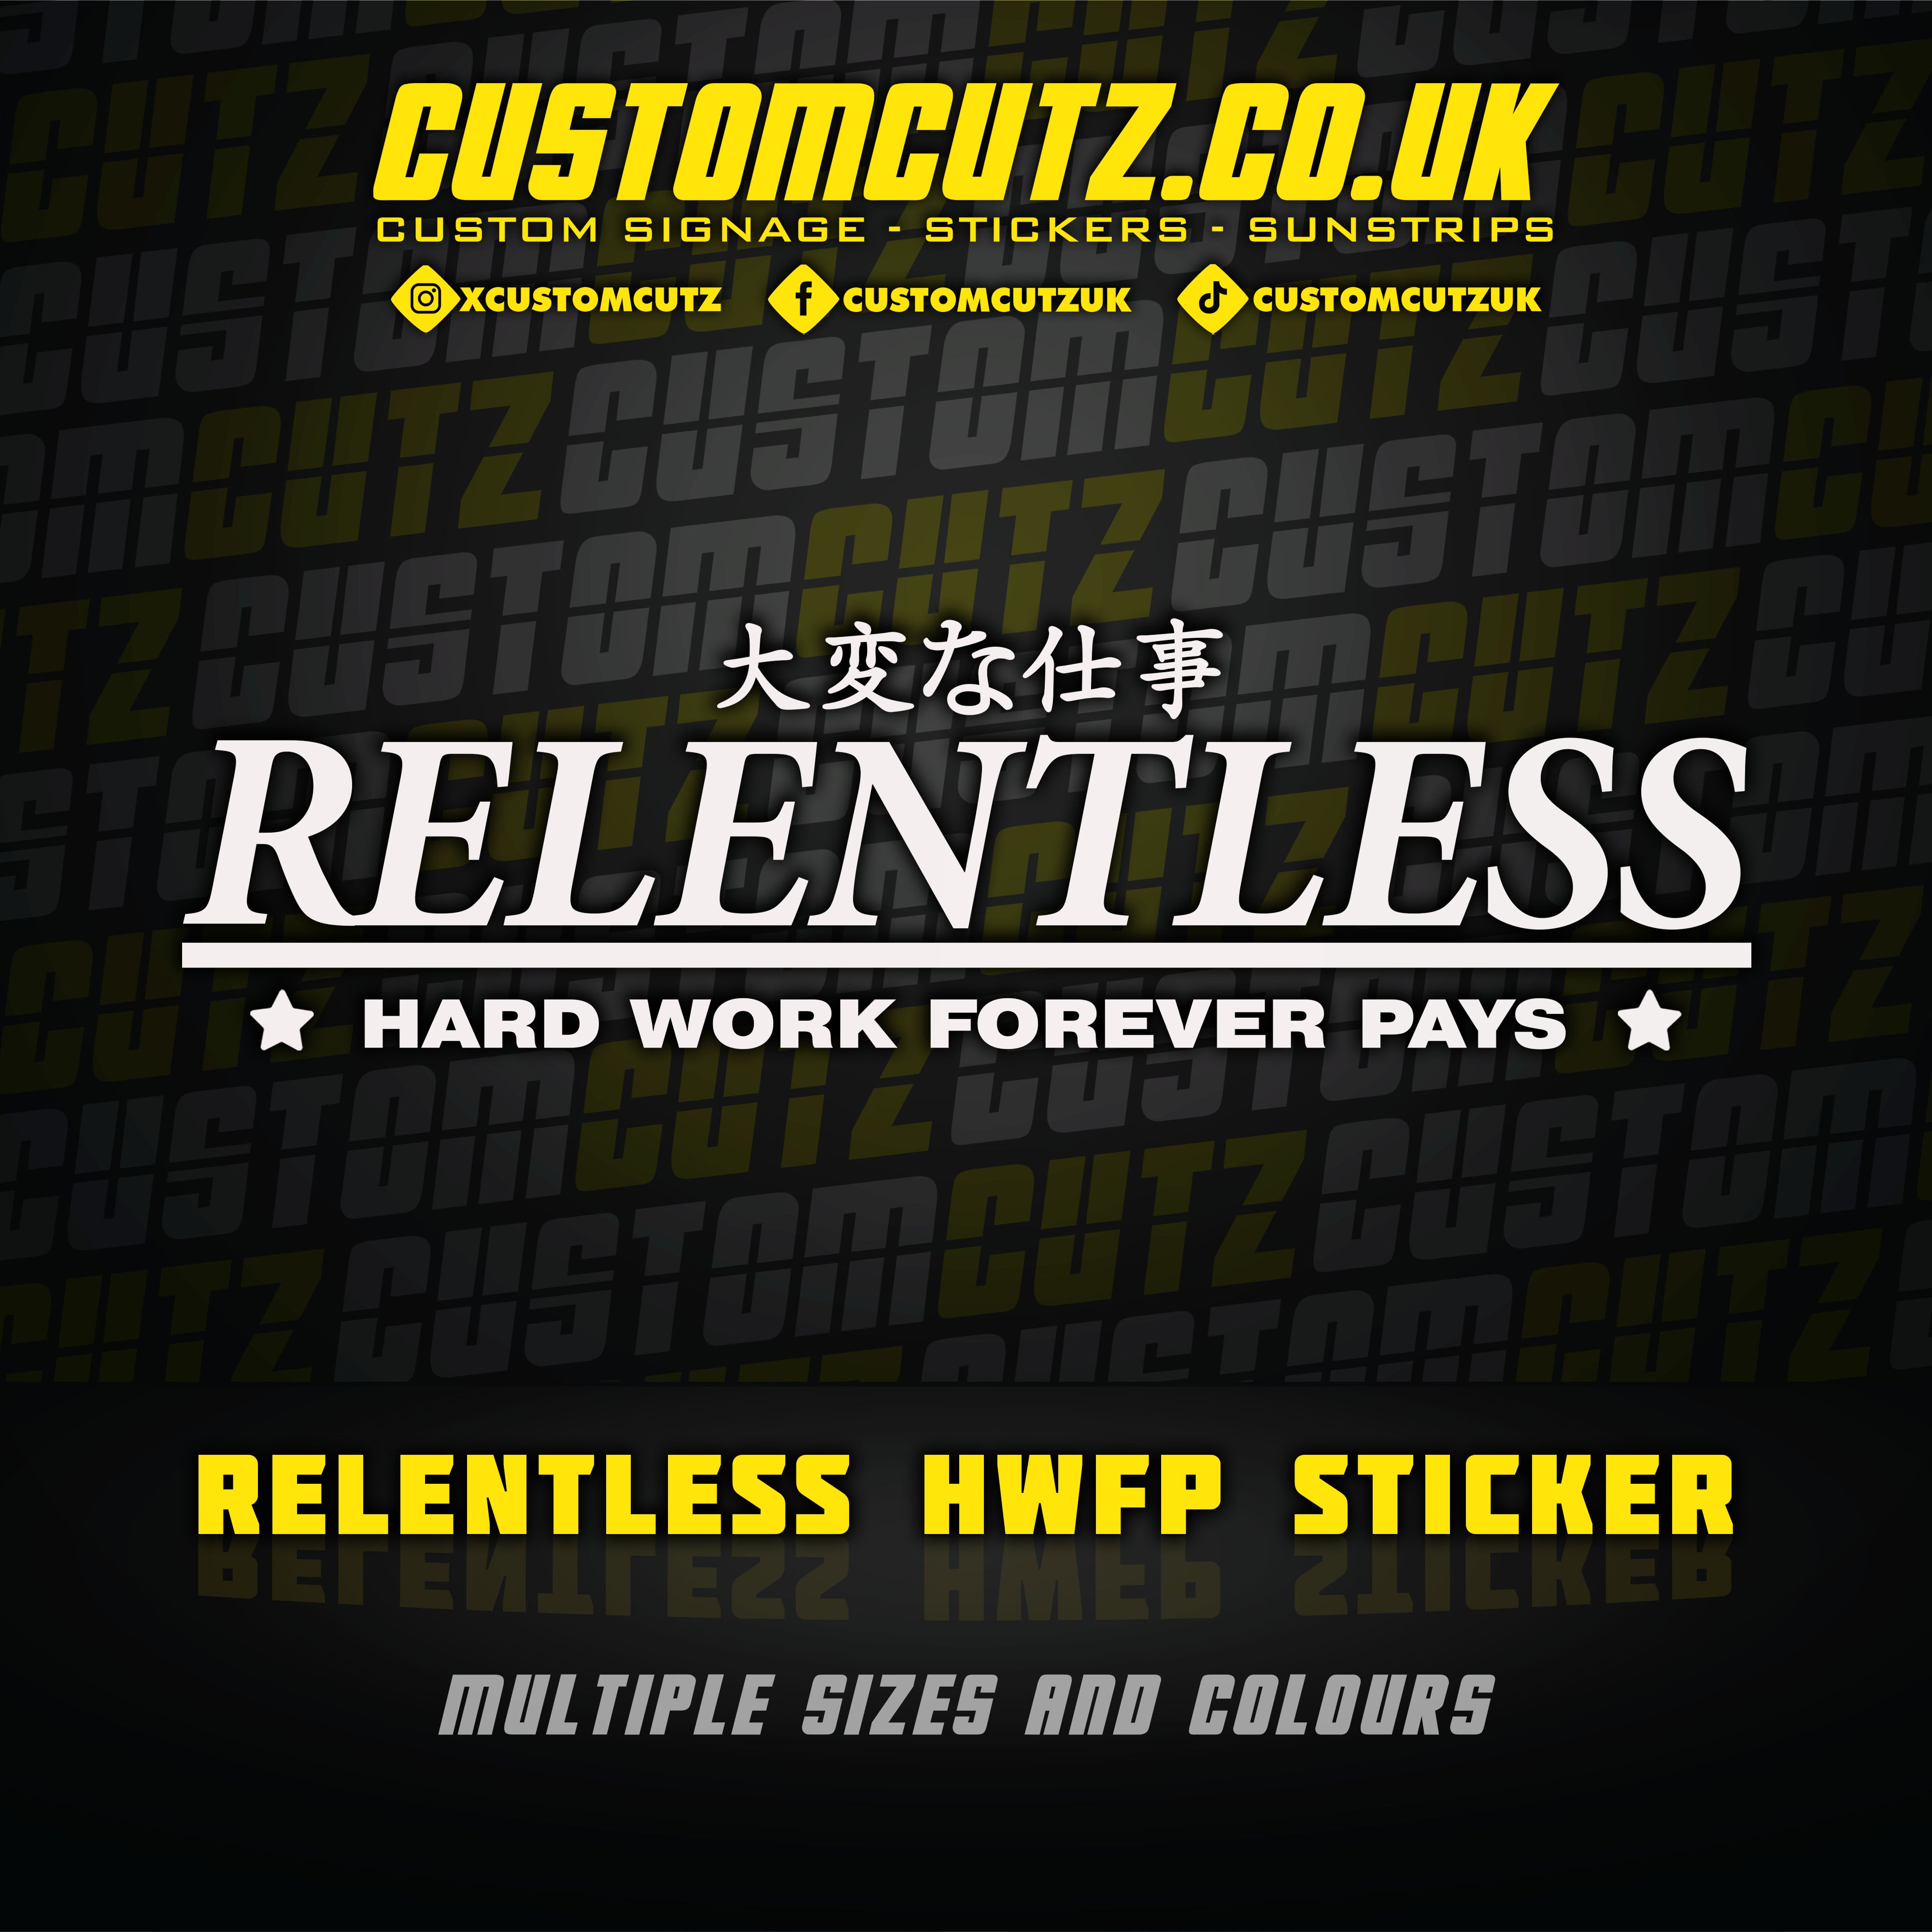 Relentless HWFP Sticker